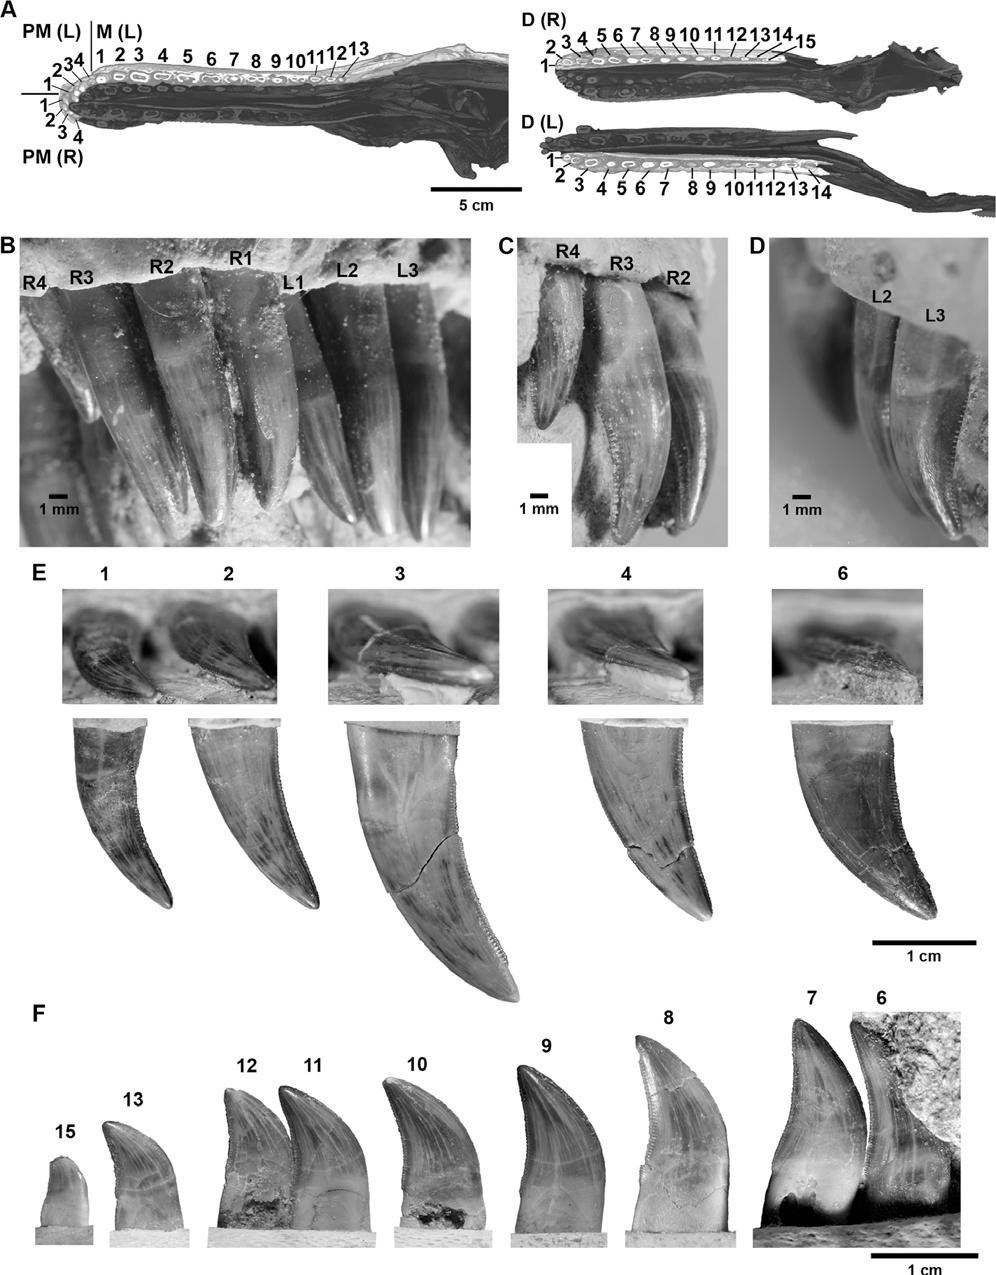 8 JOURNAL OF VERTEBRATE PALEONTOLOGY, VOL. 31, NO. 3, 2011 FIGURE 6. Dental morphology of a juvenile Tarbosaurus bataar (MPC-D 107/7).